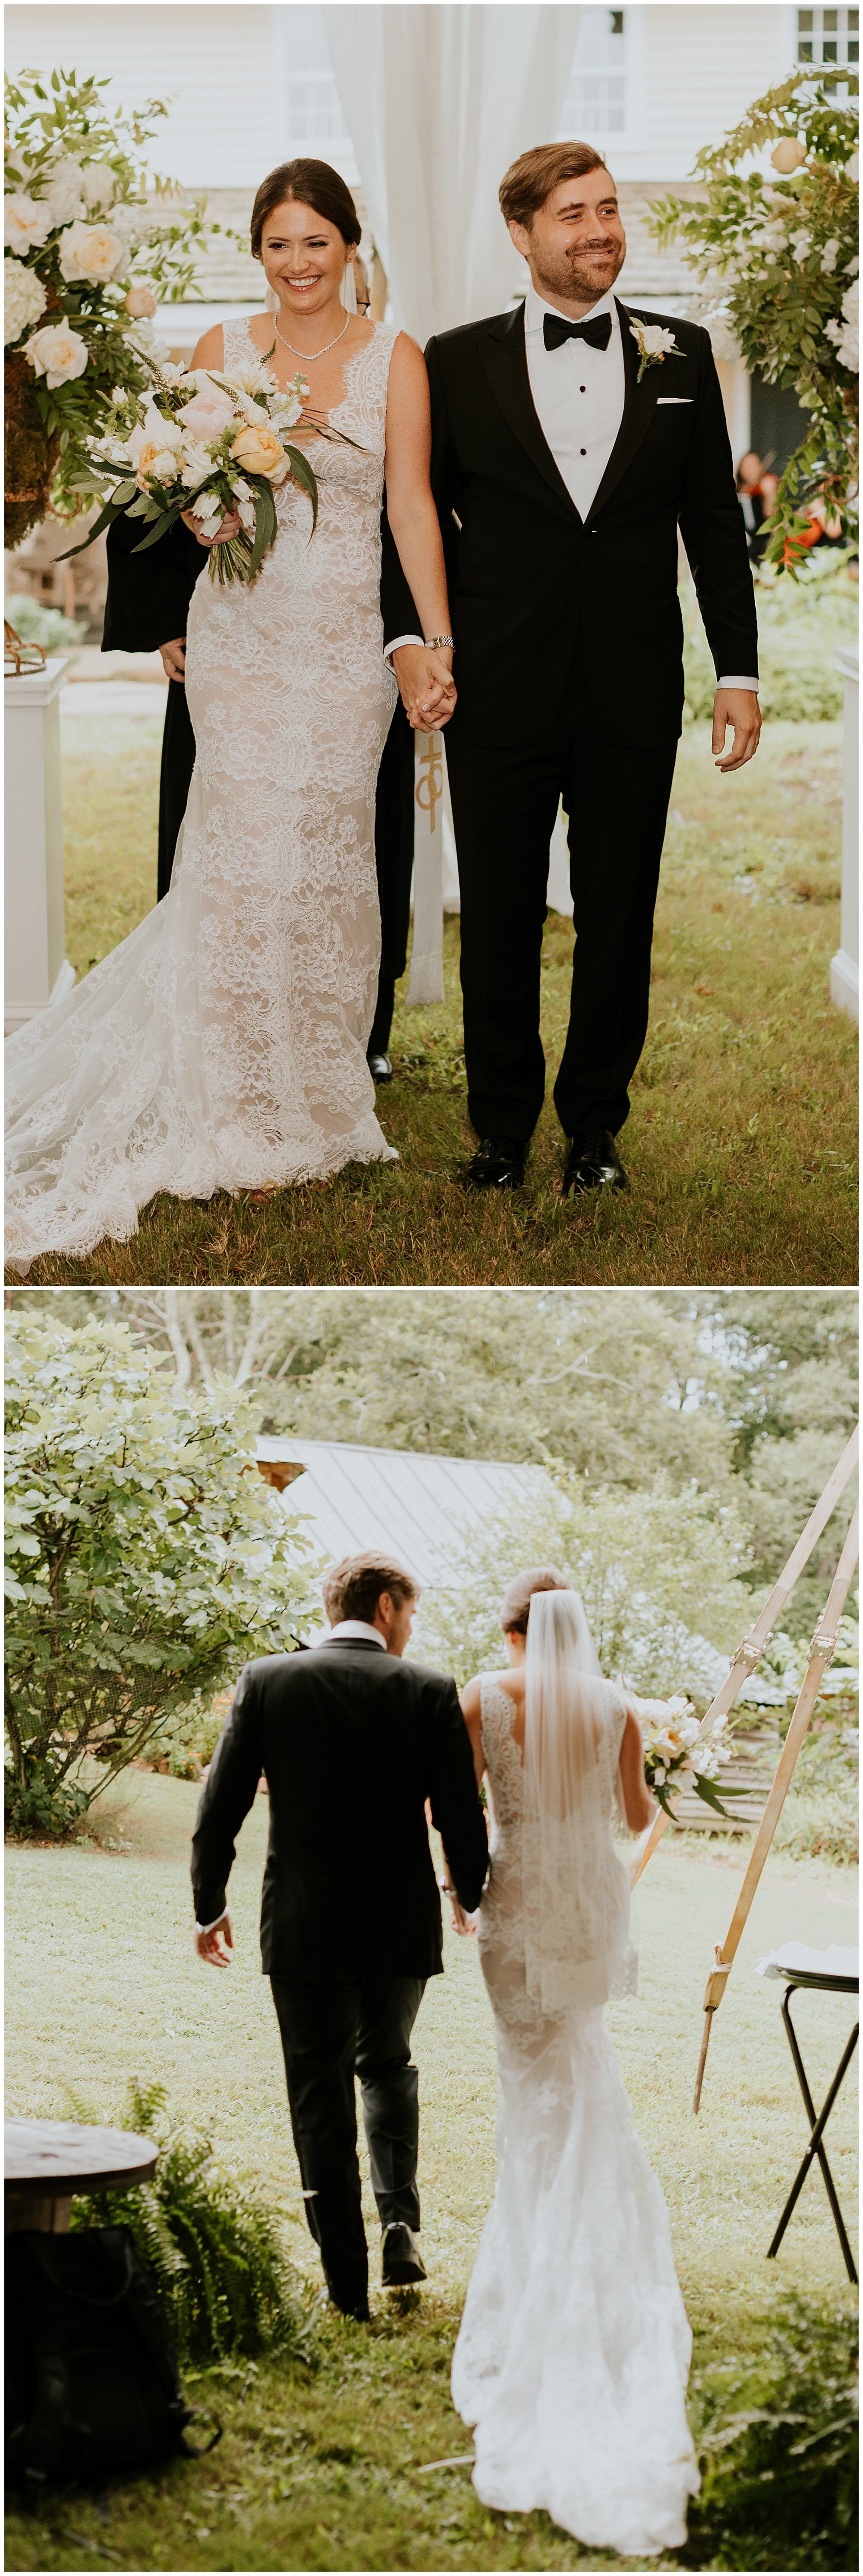 The Hills Wedding, The Hills Athens Georgia Wedding Photographer, Georgia Wedding Photographer, Athens Wedding Photographer 